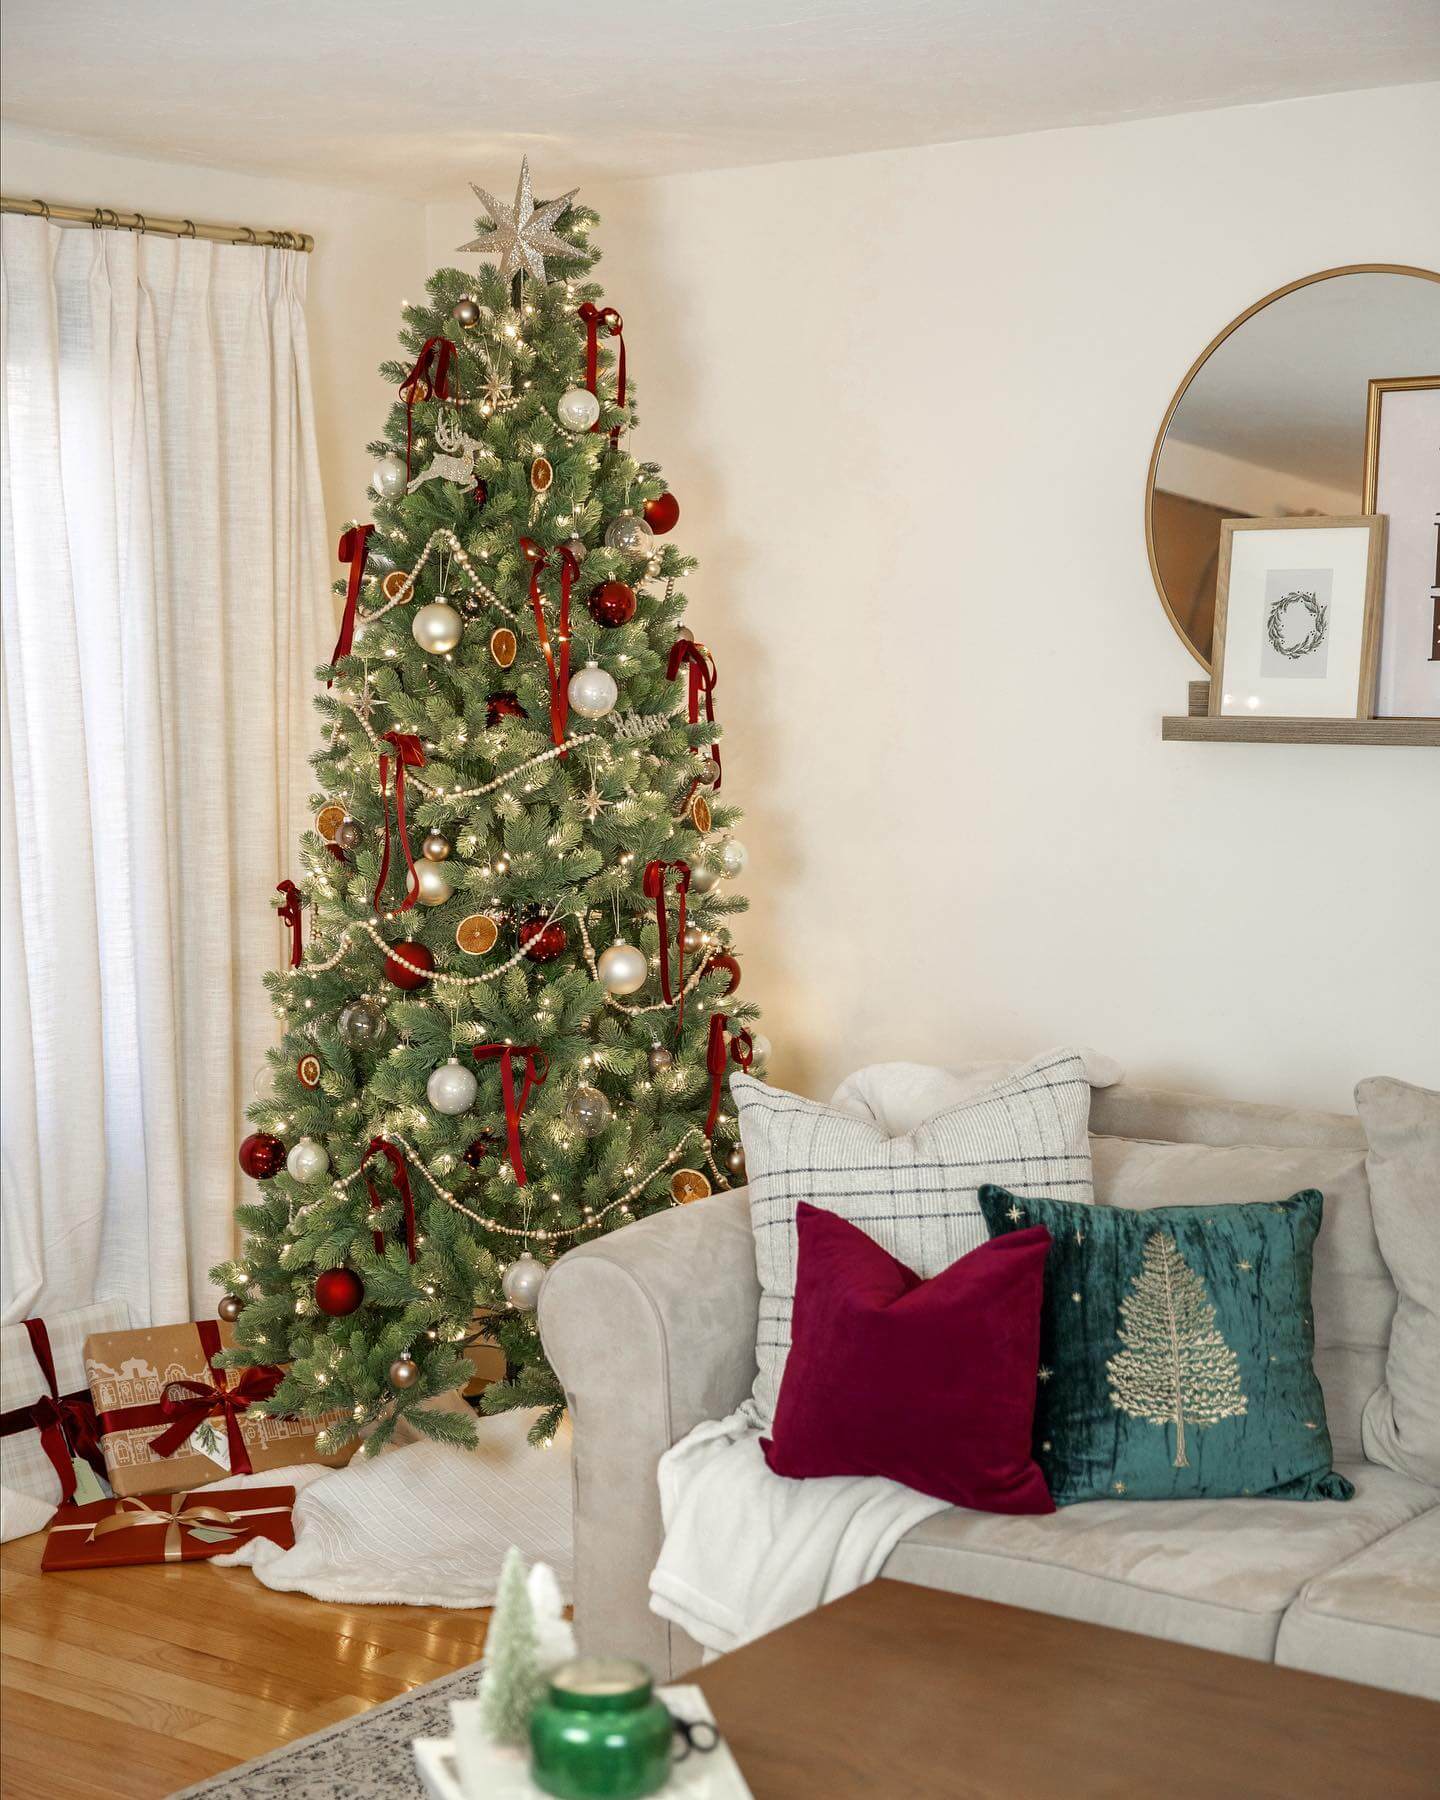 How to Shape Your Christmas Tree